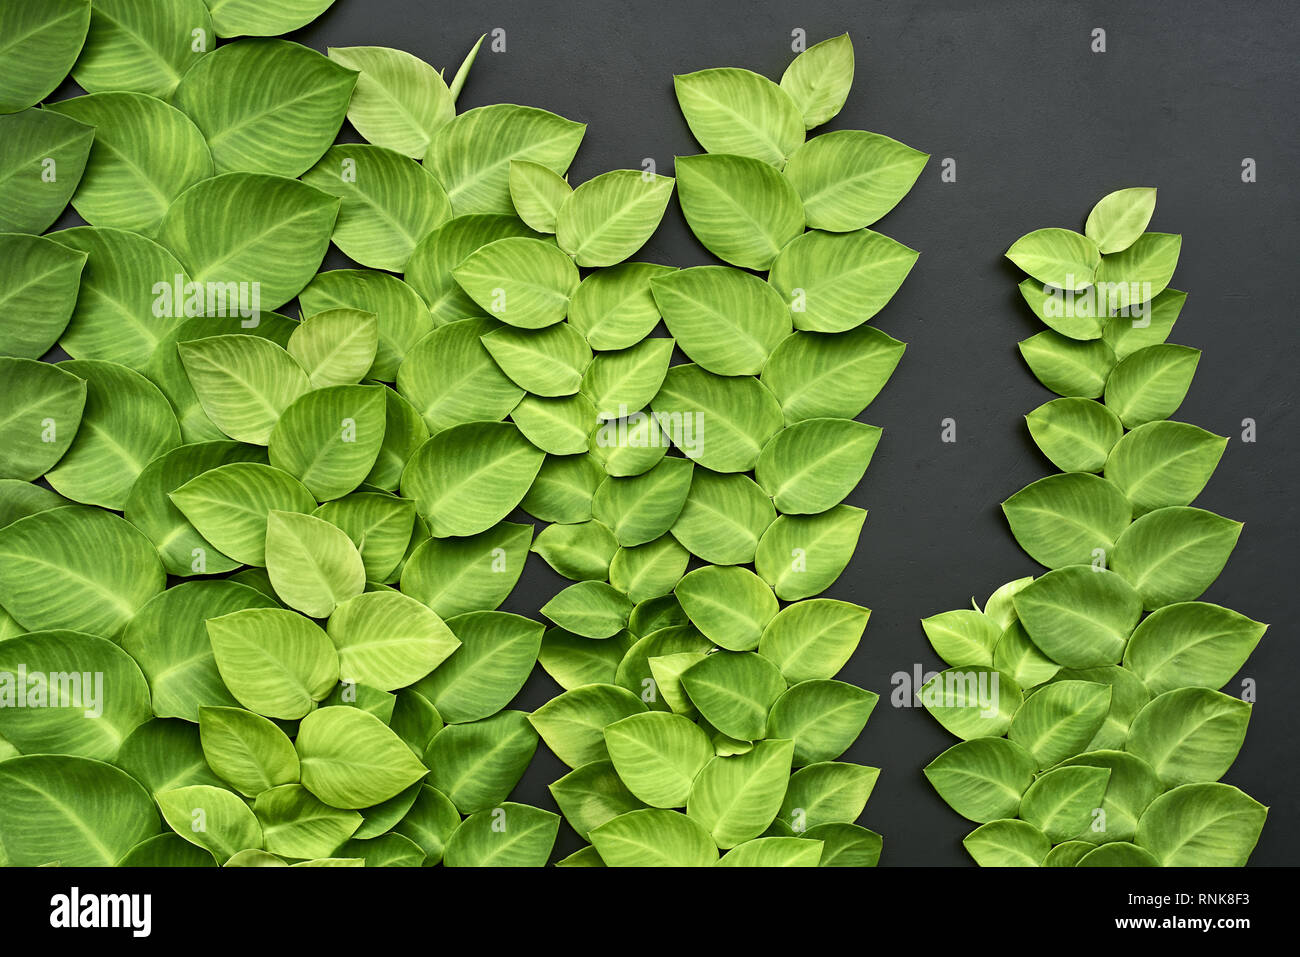 creeper plants -fotos und -bildmaterial in hoher auflösung – alamy